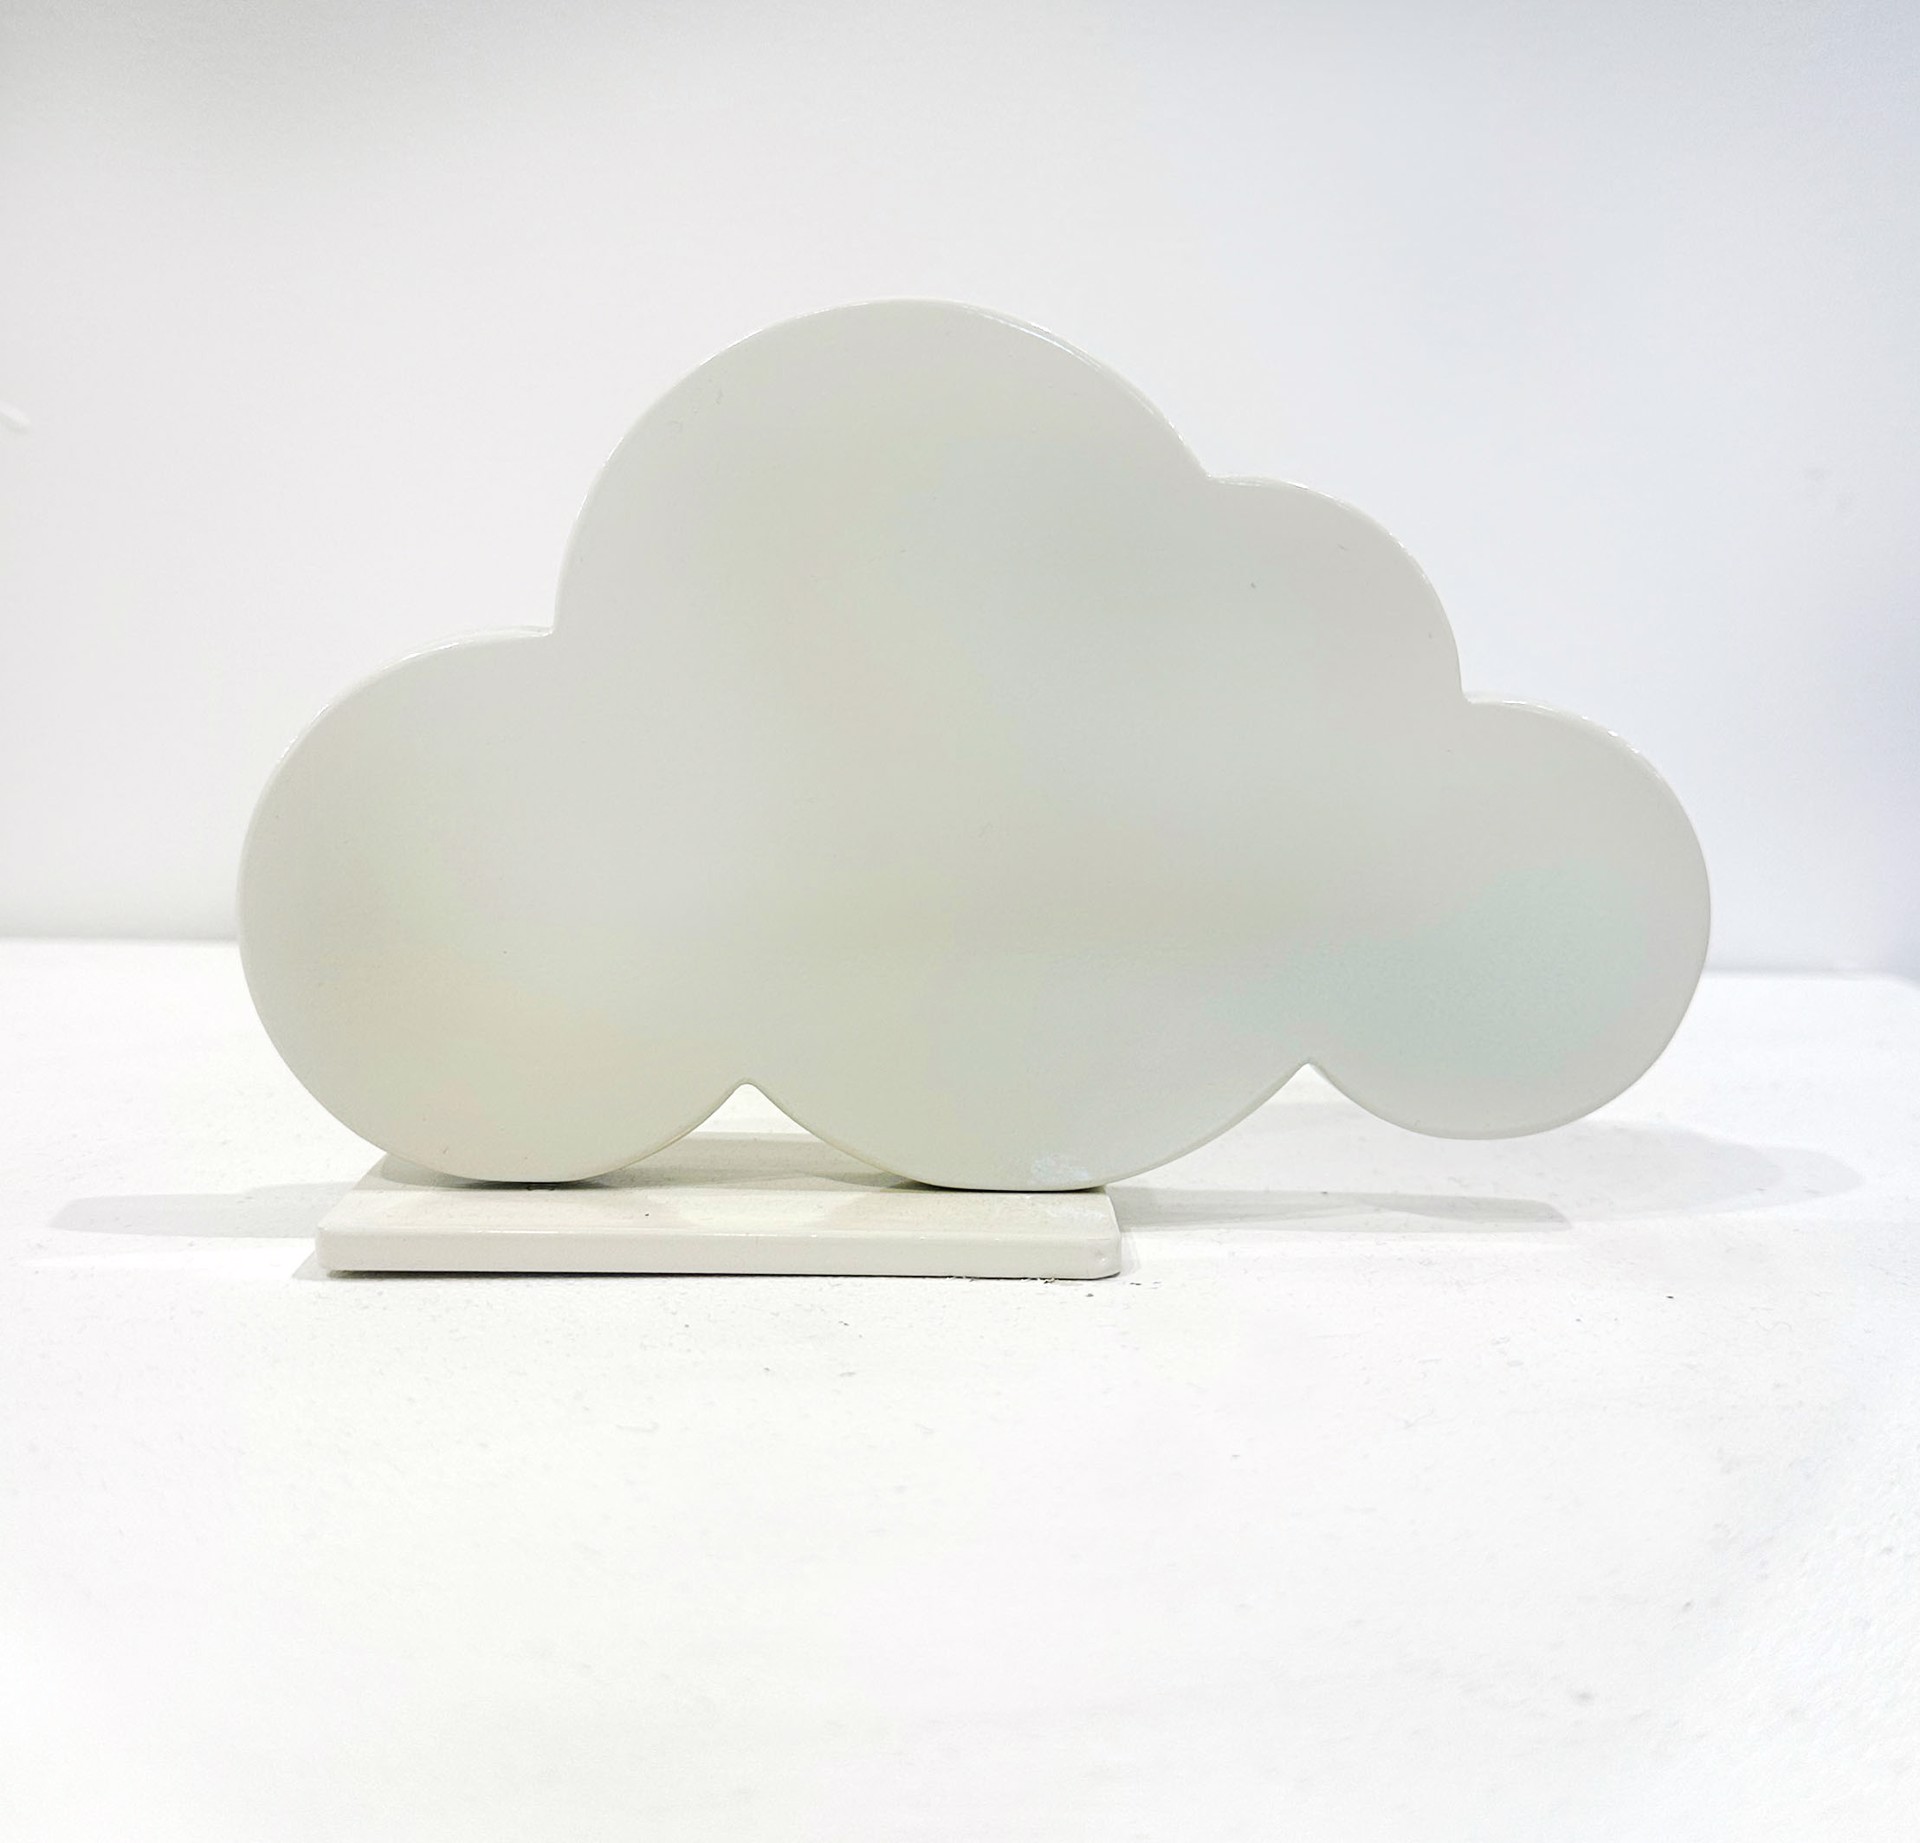 Mini Cloud by Jeffie Brewer